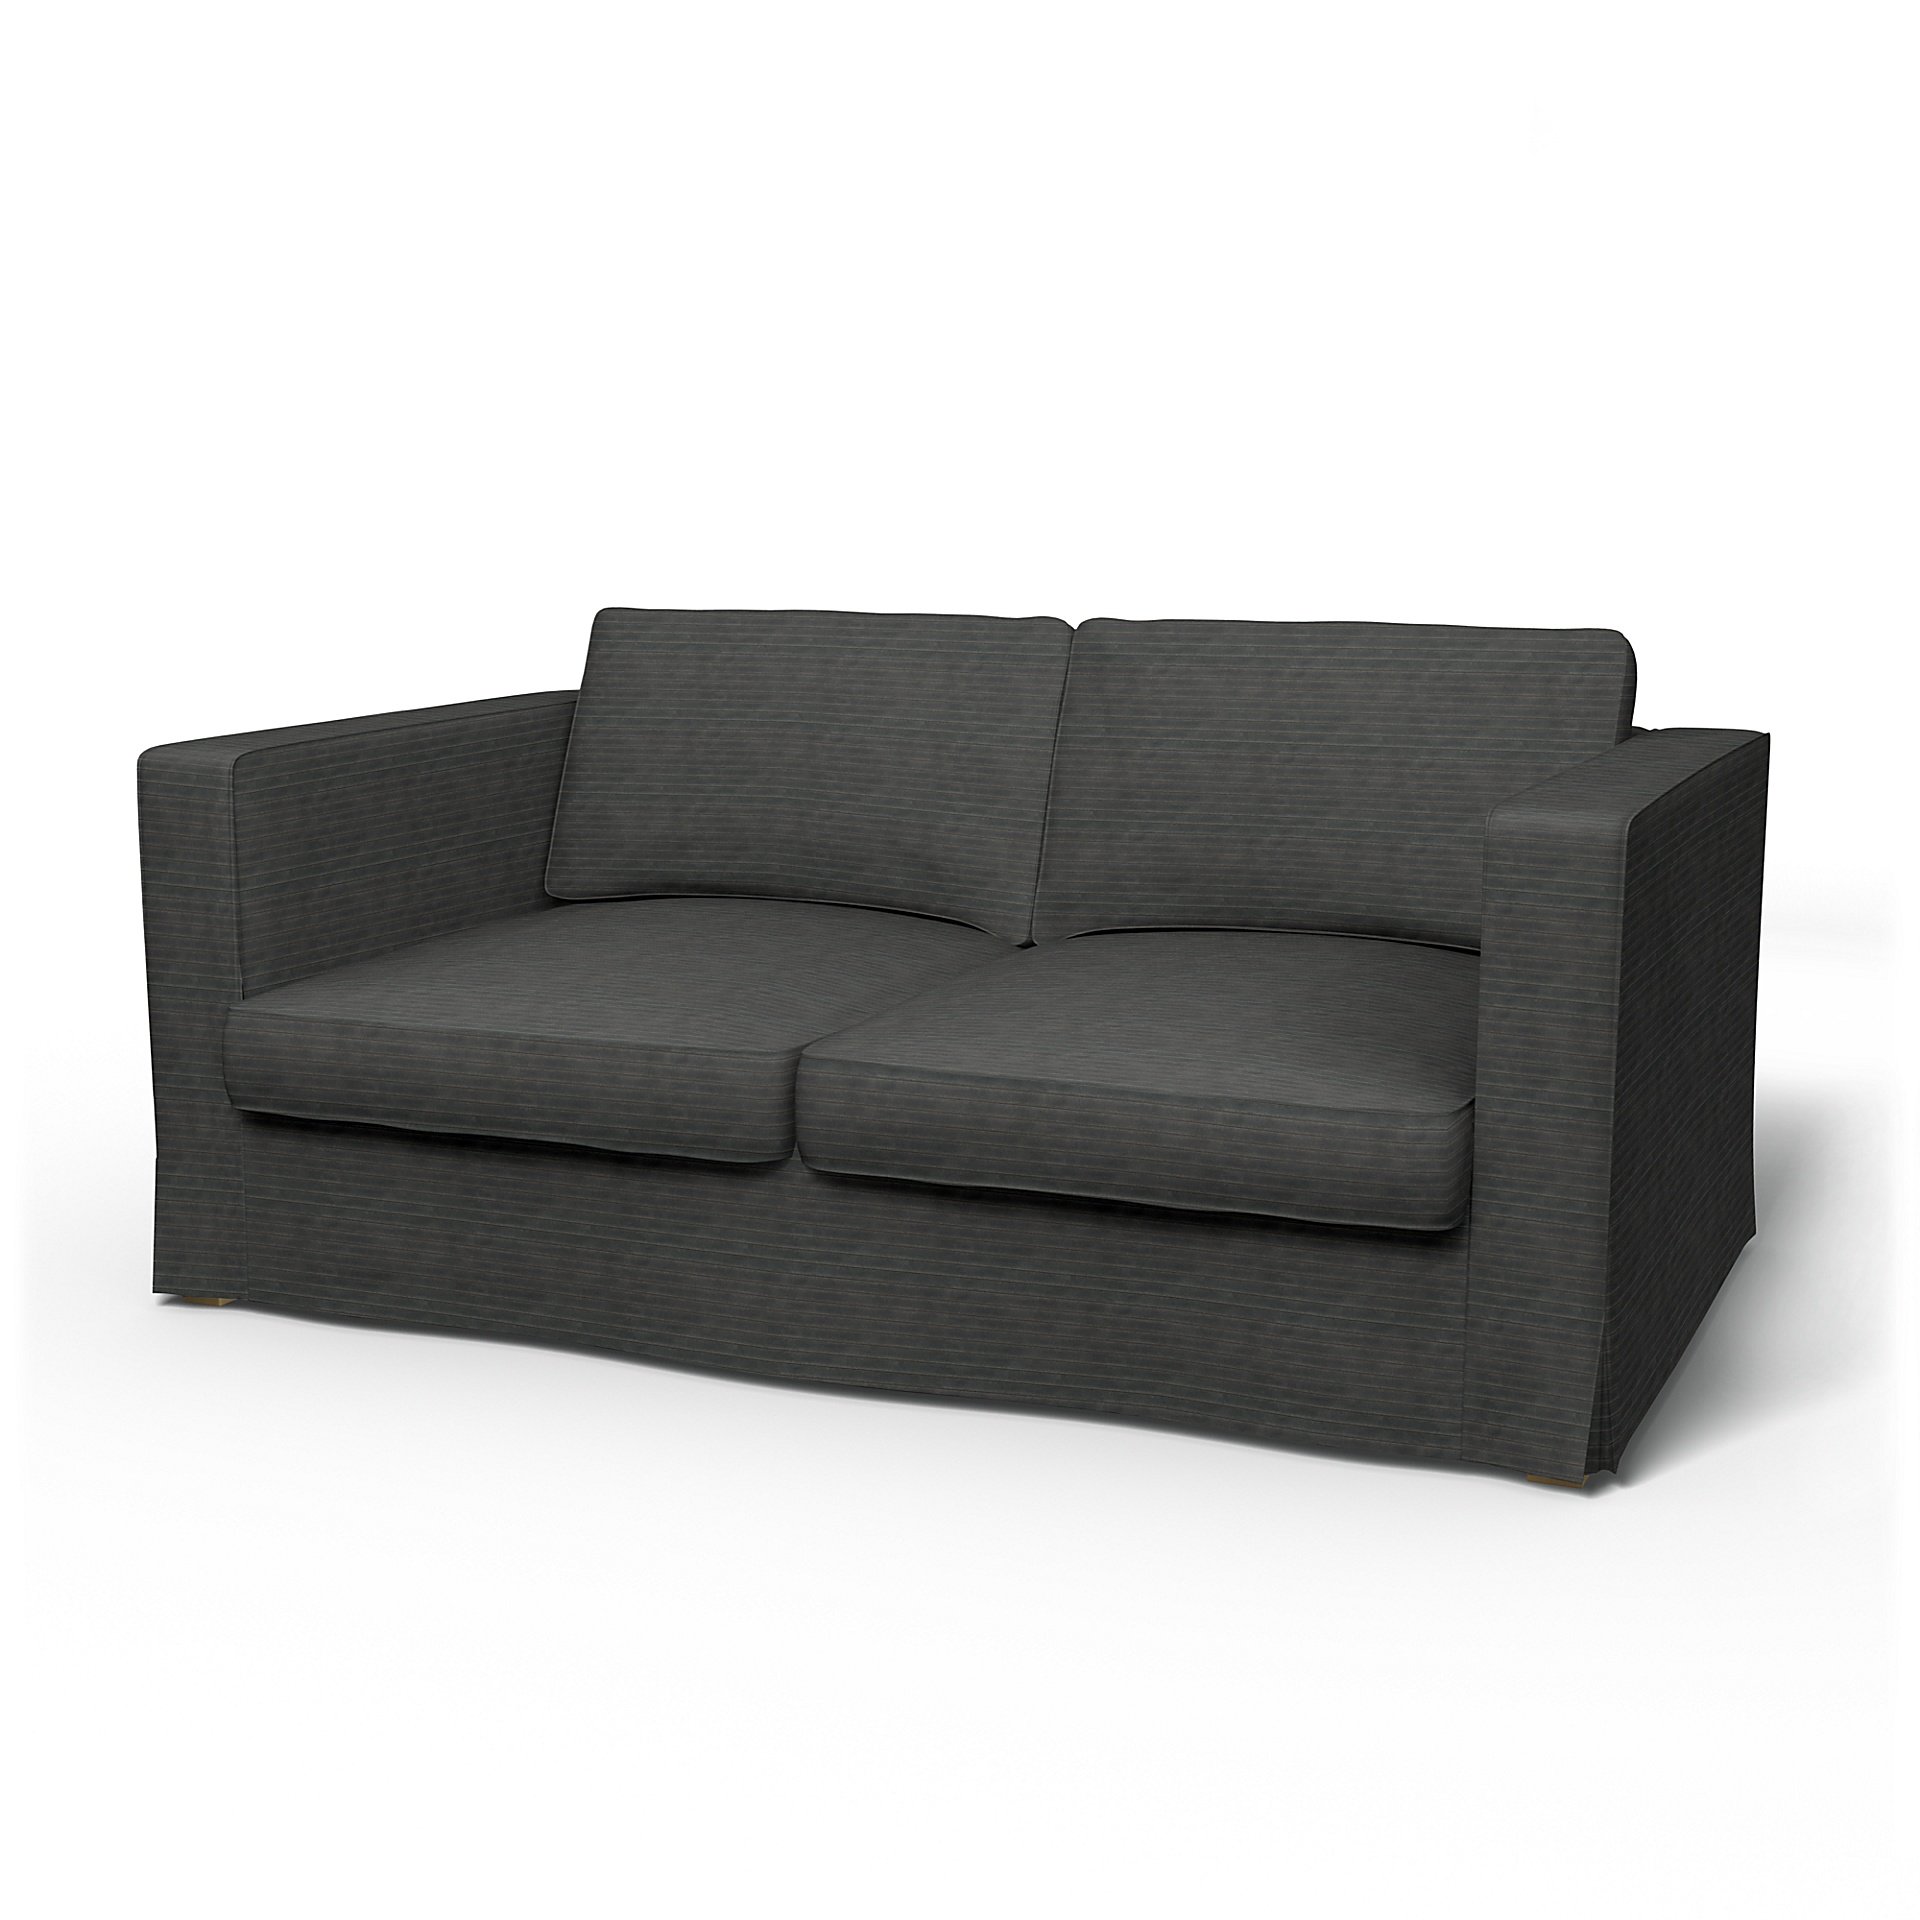 IKEA - Karlstad 2 Seater Sofa Cover, Licorice, Corduroy - Bemz